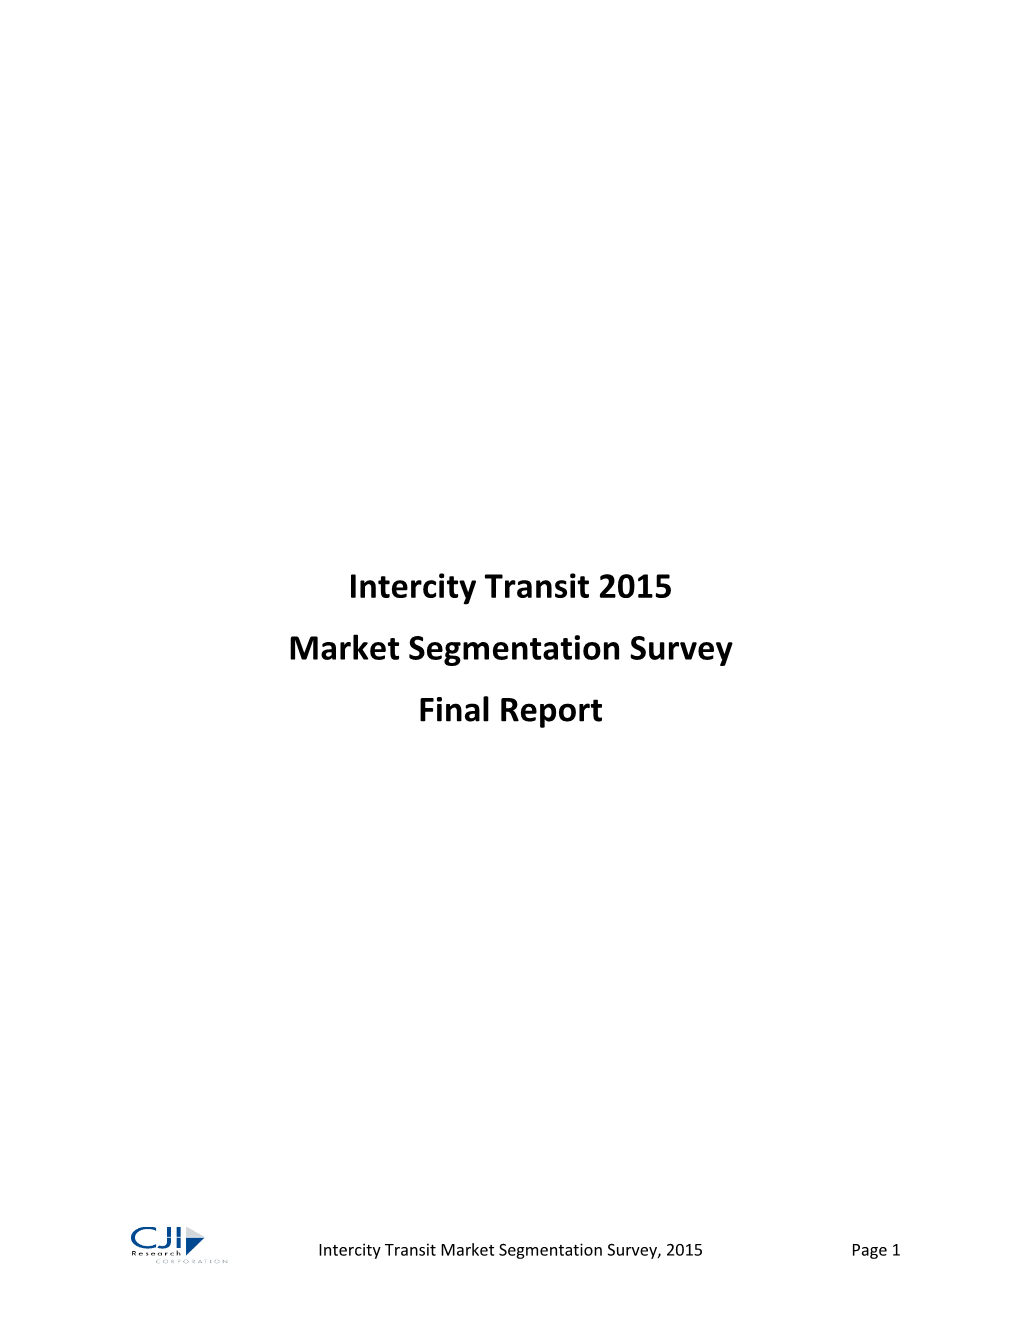 Intercity Transit 2015 Market Segmentation Survey Final Report